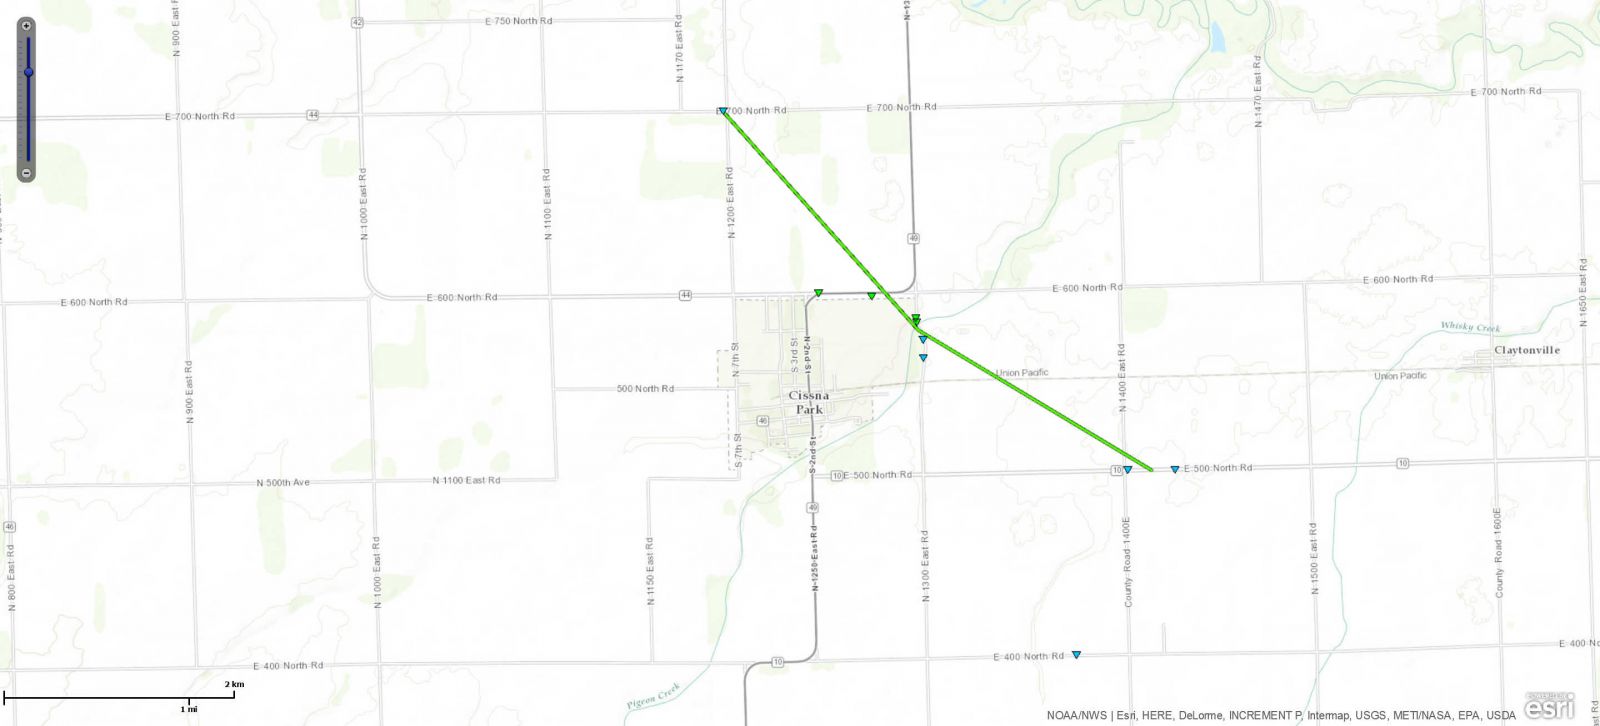 Track Map of Cissna Park, IL tornado